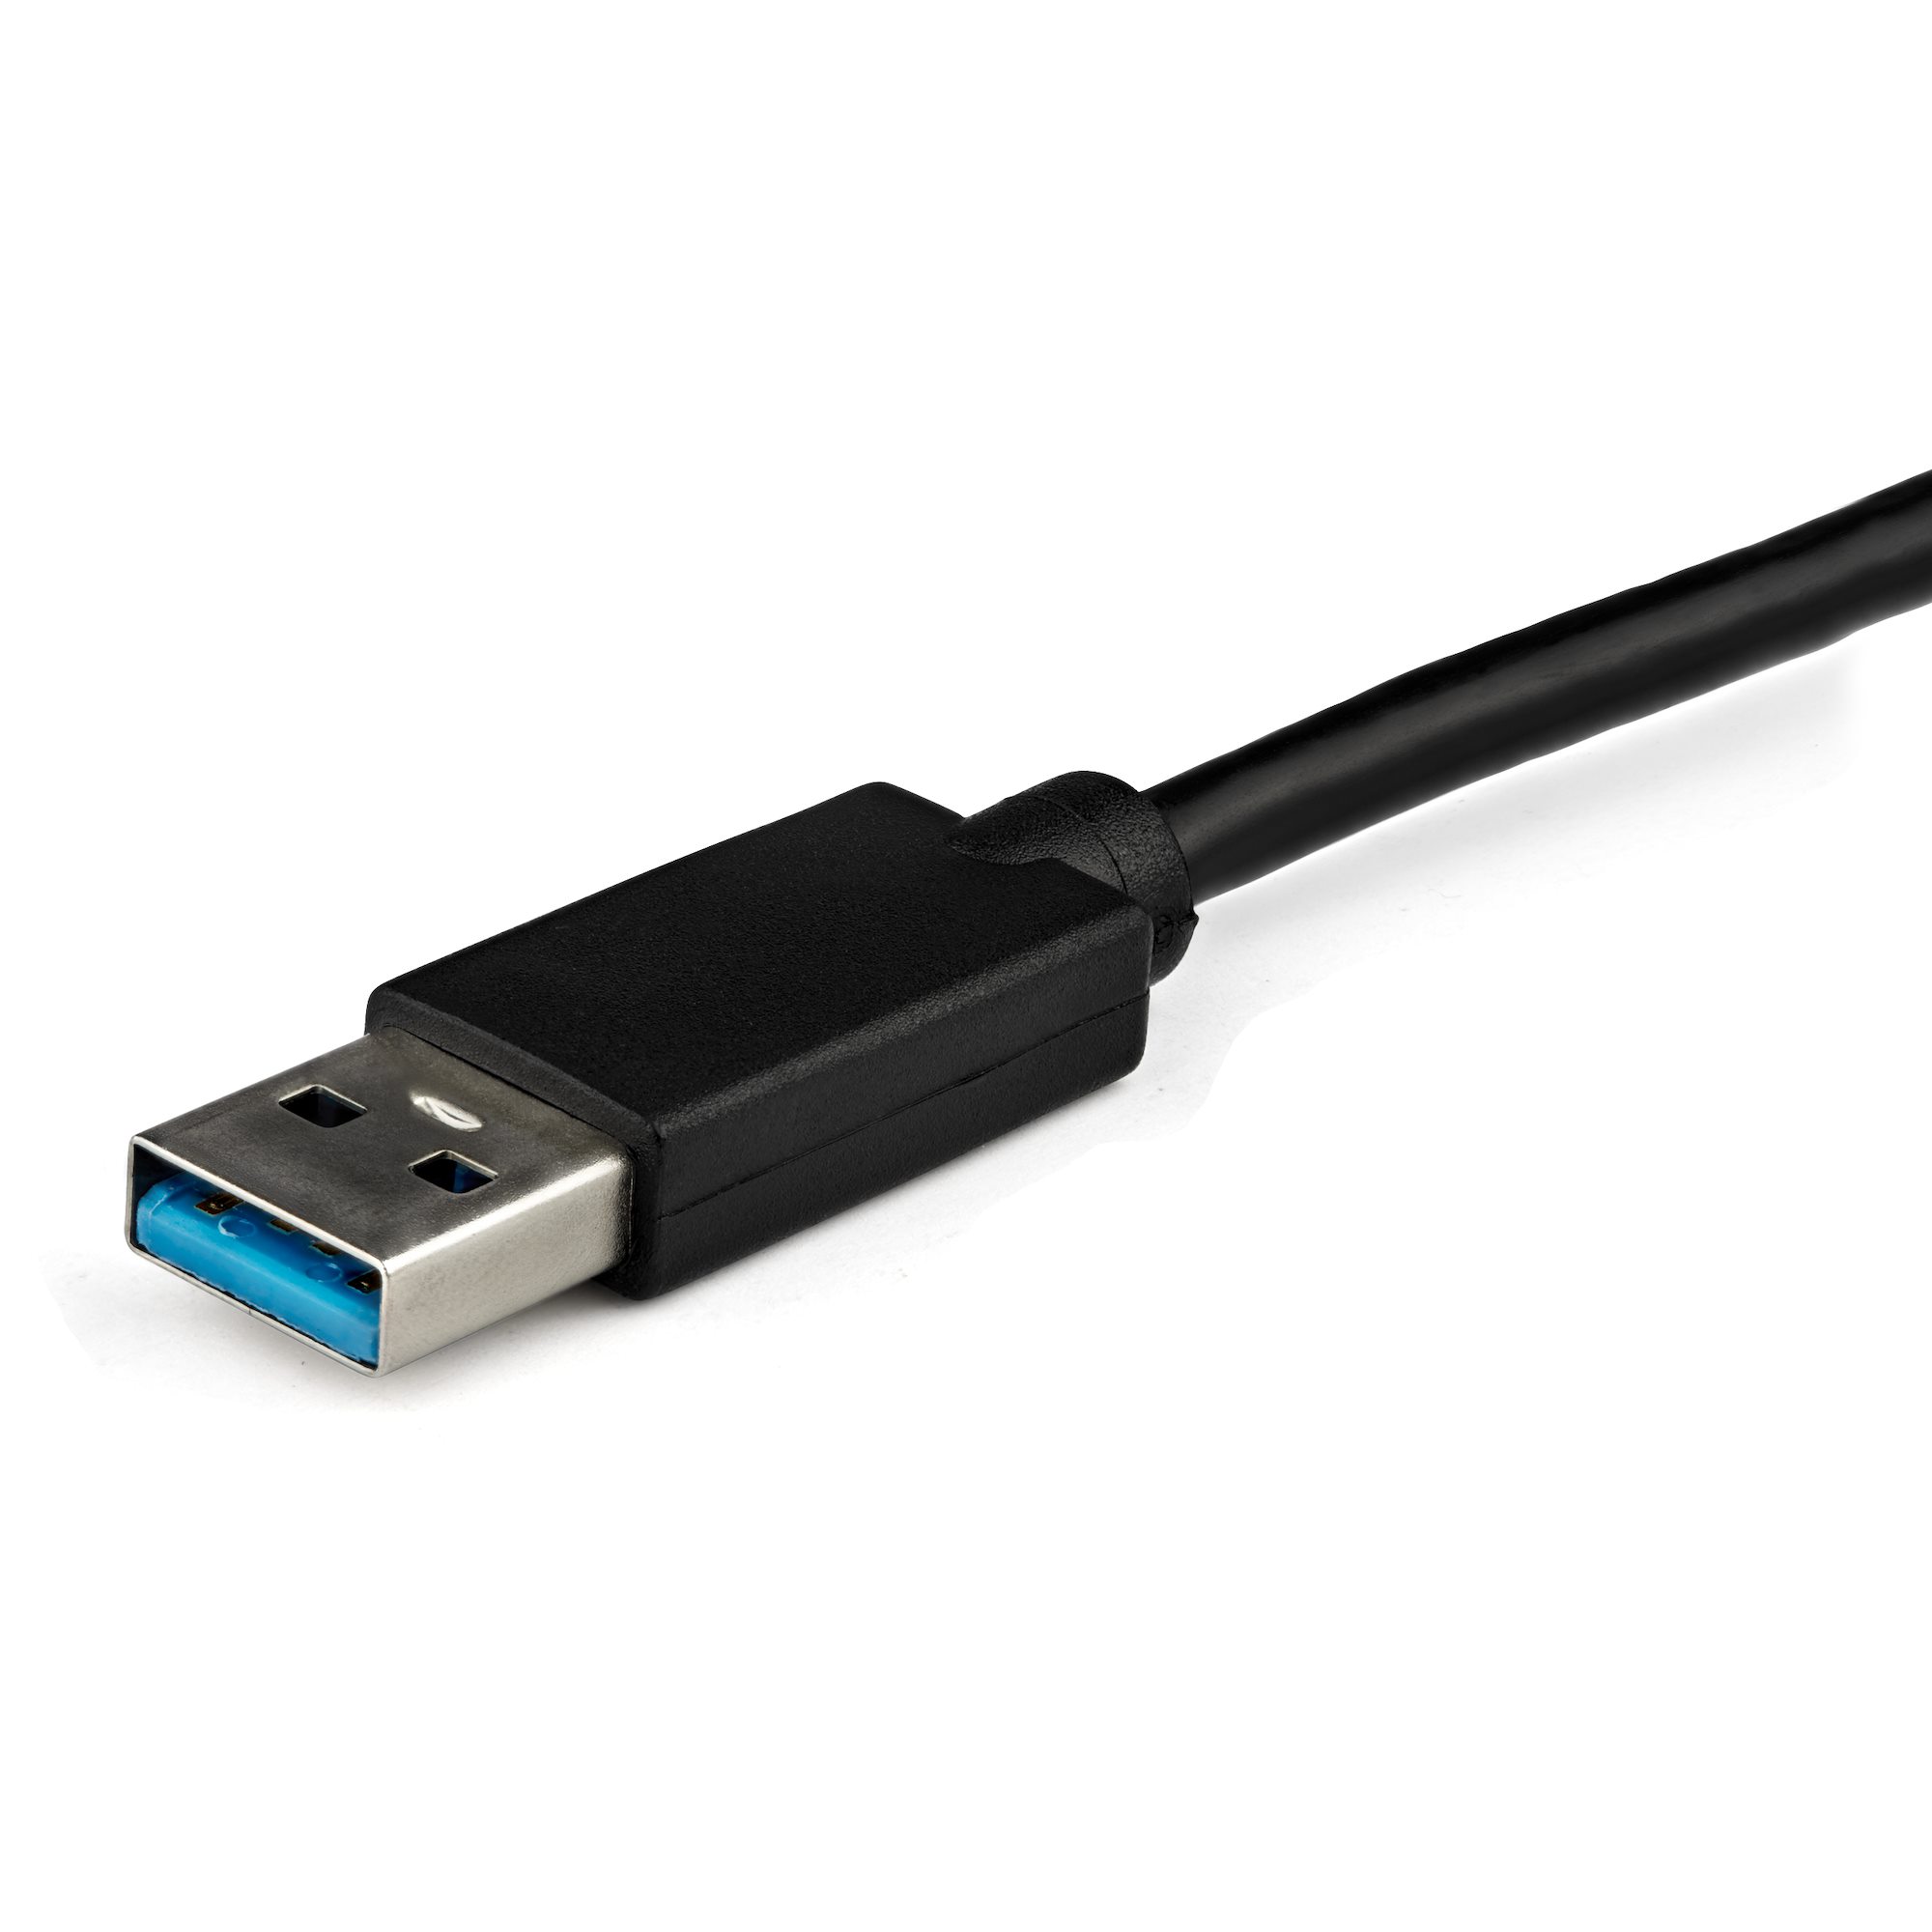 Adaptador USB a HDMI macho a hembra USB 3.0 a HDMI Full HD 1080P Convertidor de vídeo y audio multipantalla compatible con Windows 7/8/10 sin MAC ni VISTA 